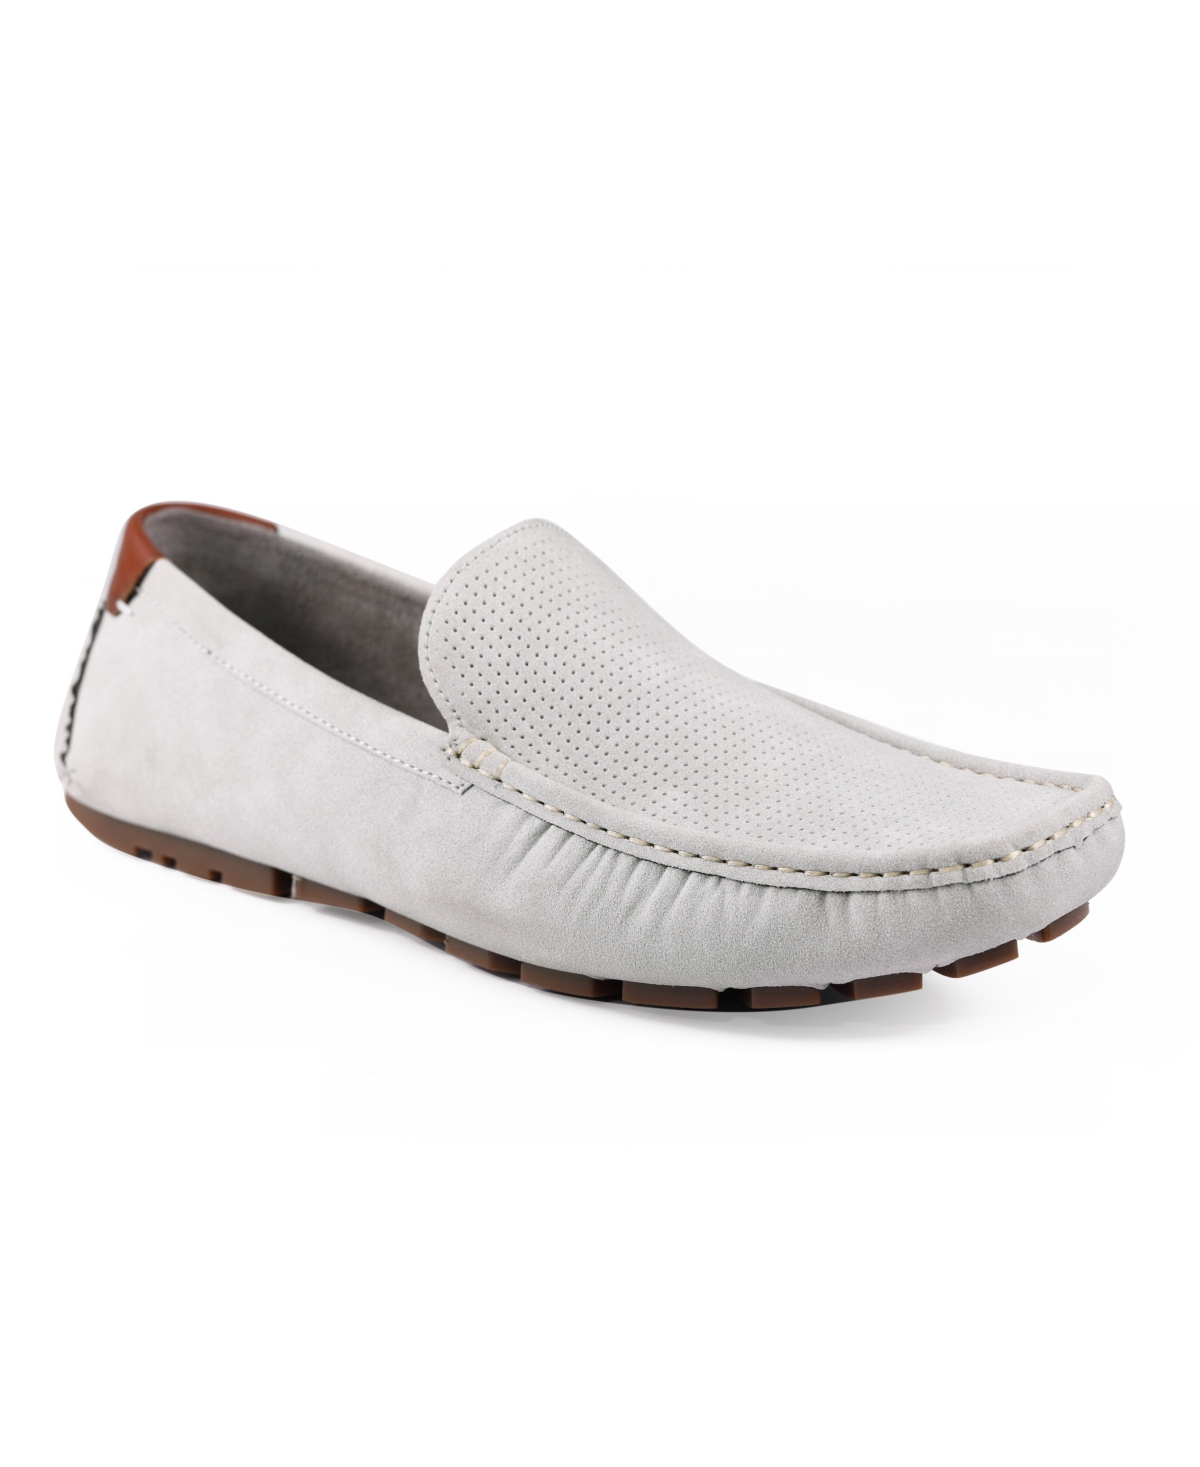 Men's Alvie Moc Toe Driving Loafers - Light Gray Perf